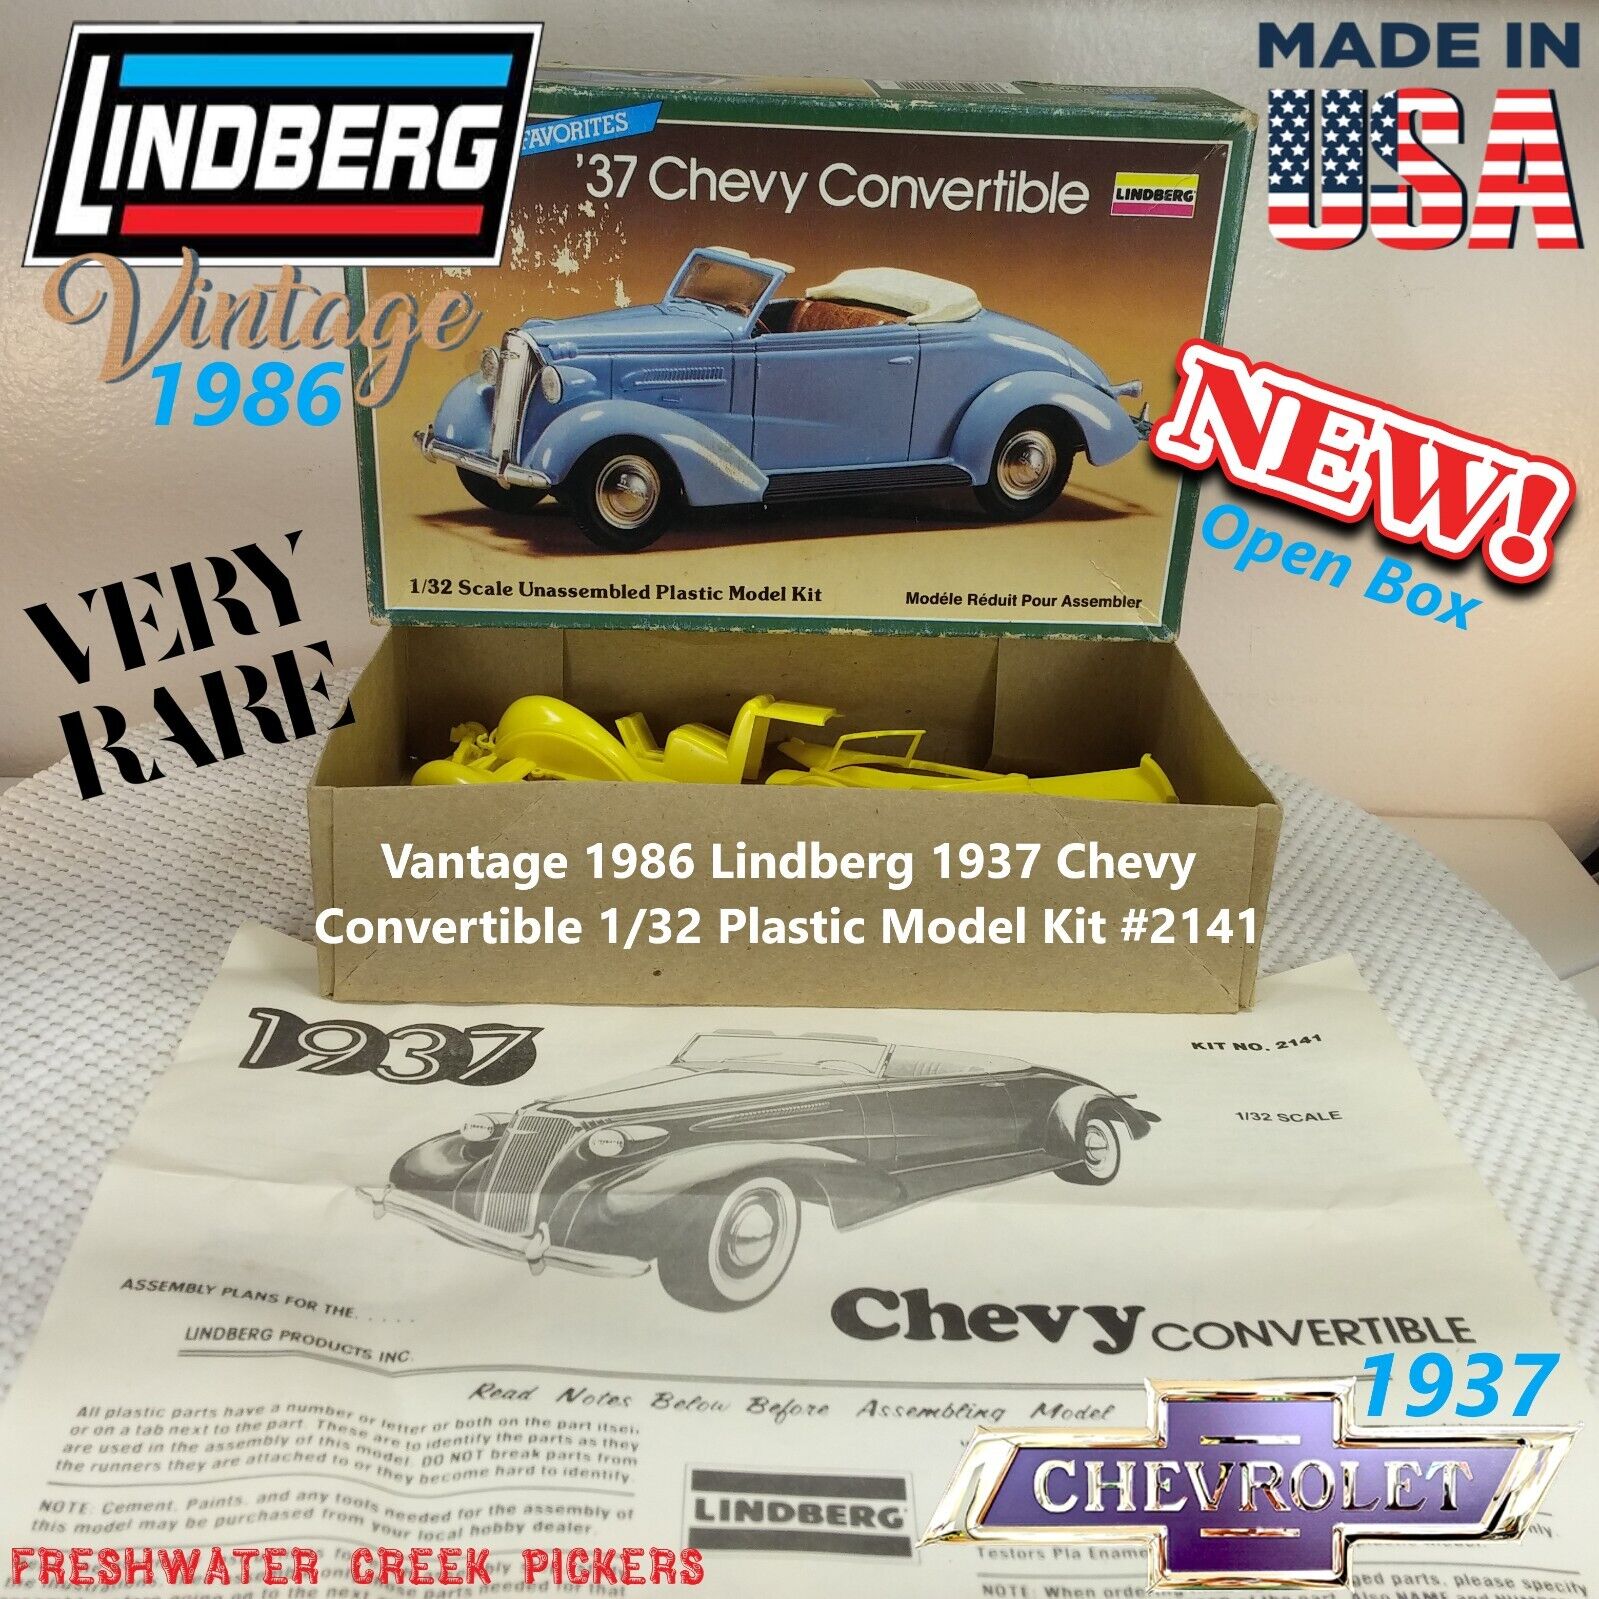 NOB Vantage 1986 Lindberg 1937 Chevy Convertible 1/32 Plastic Model Kit #2141